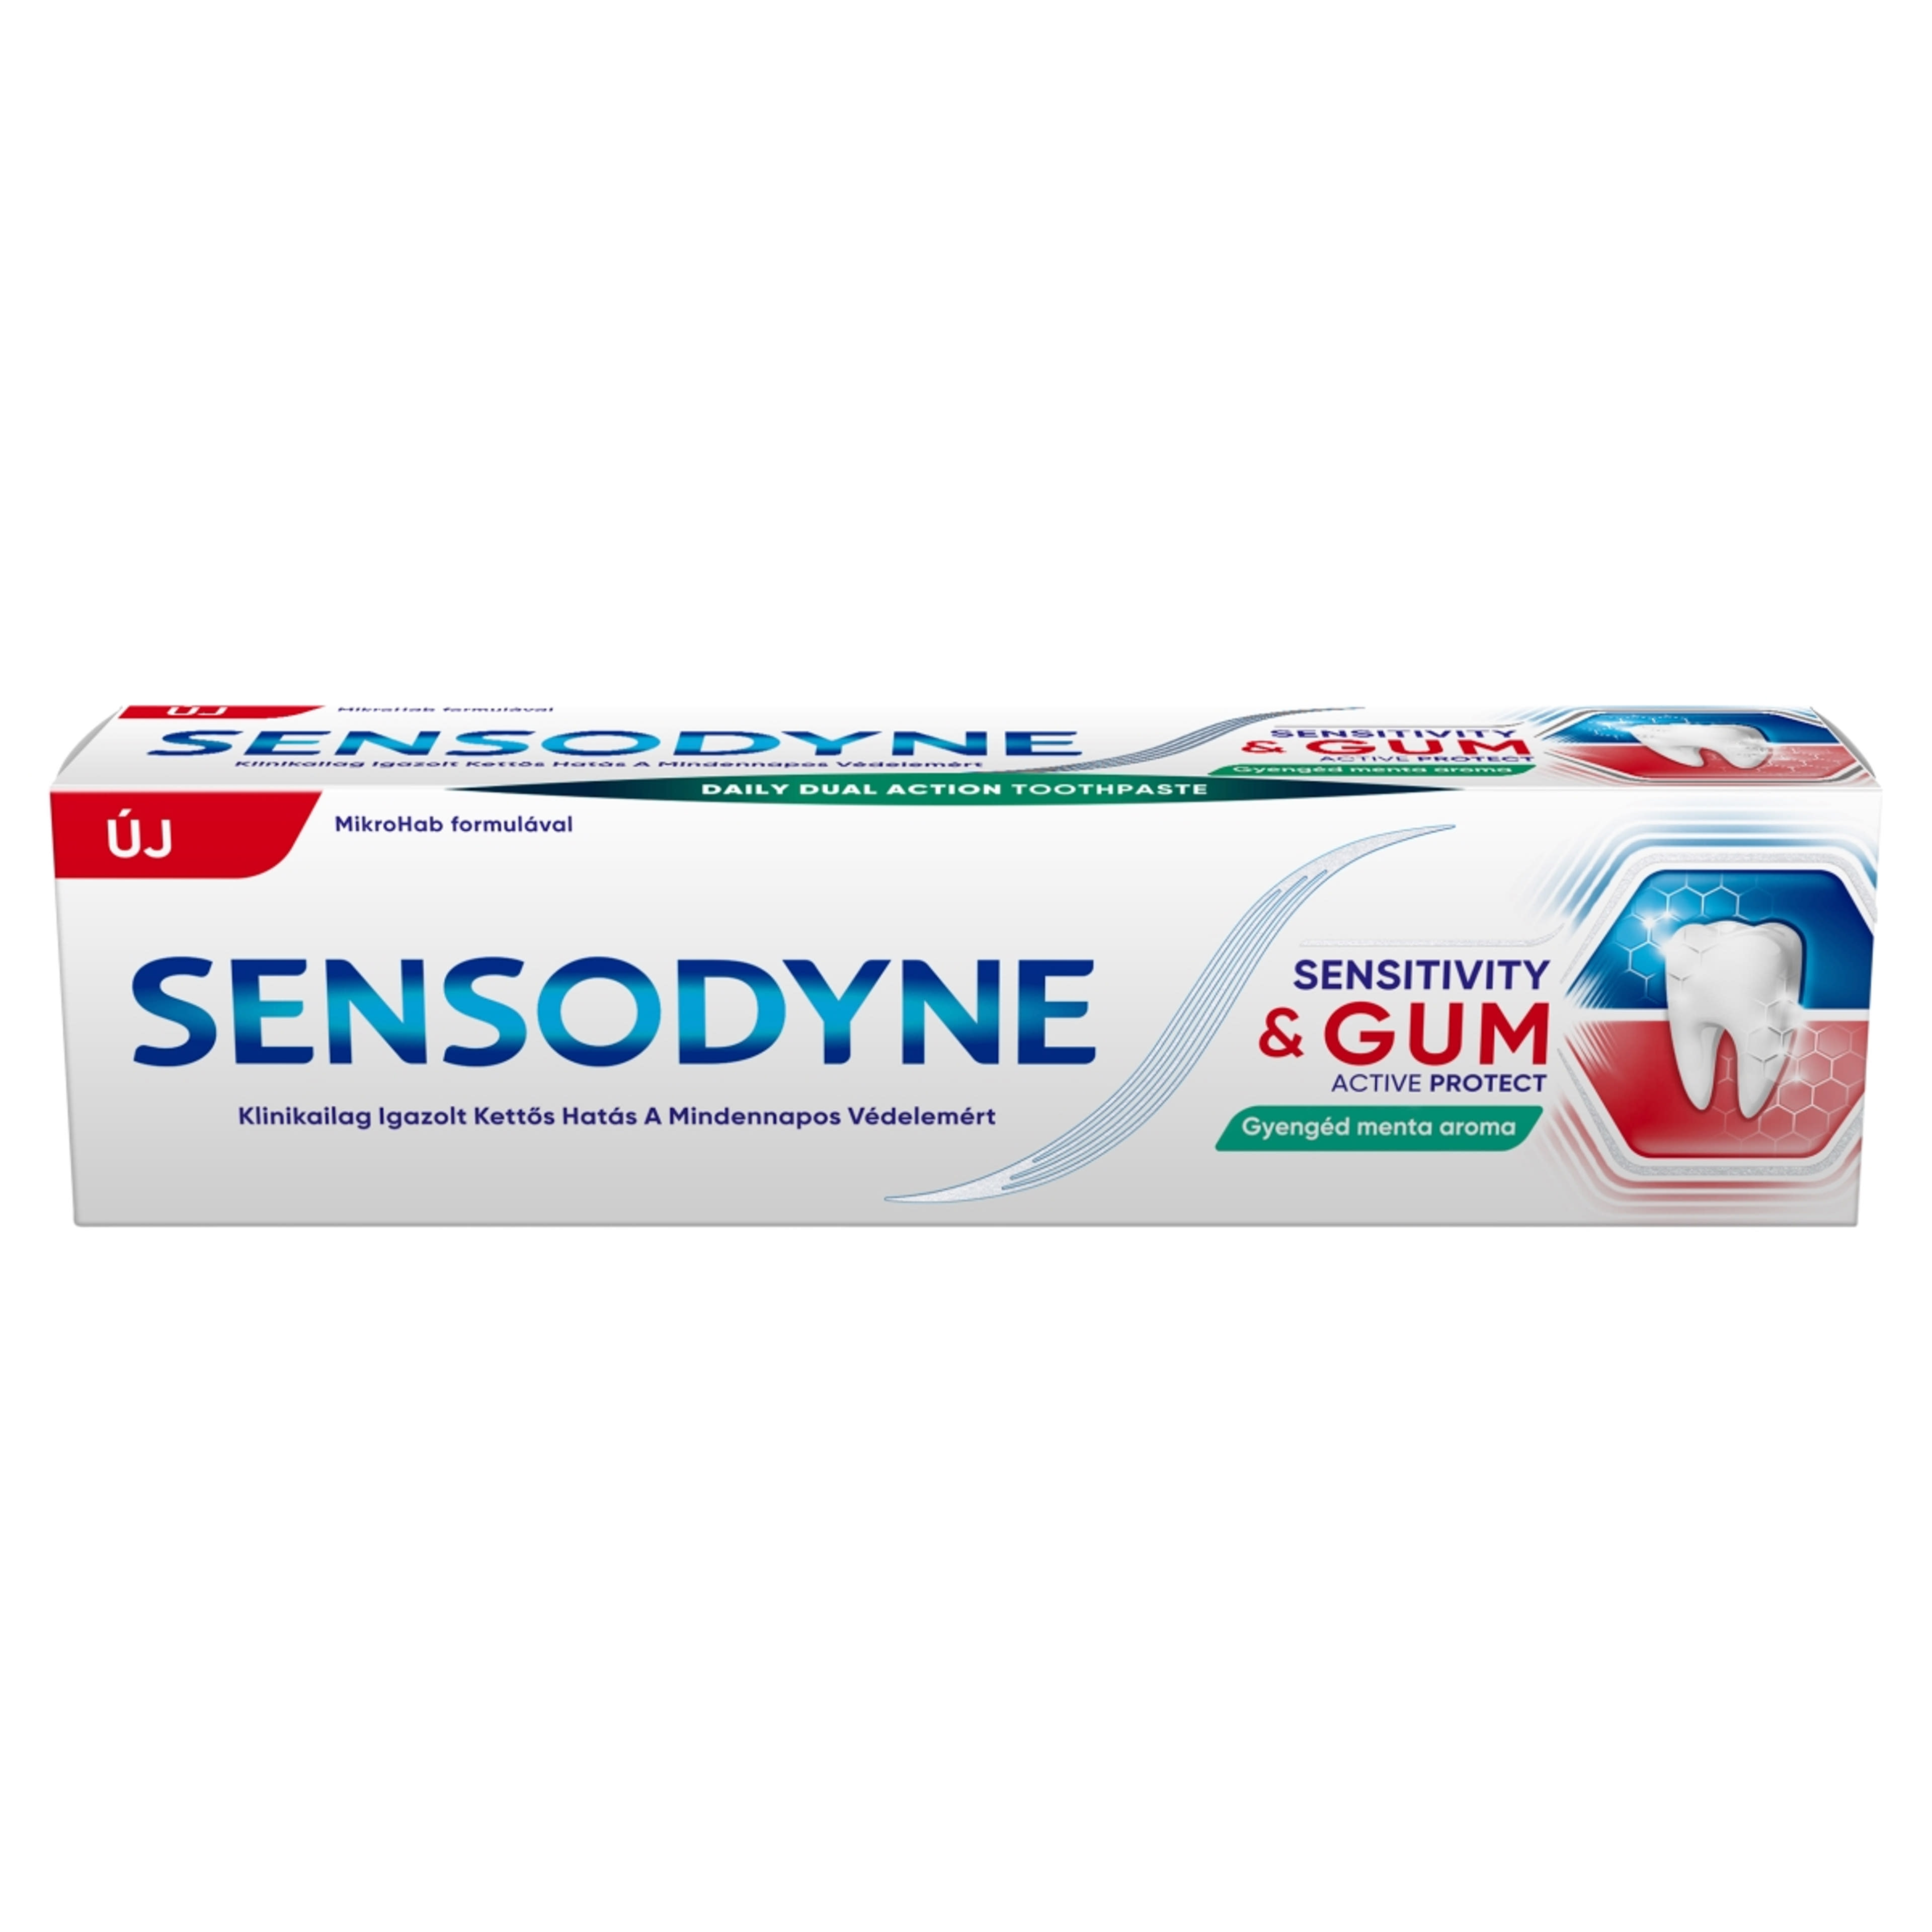 Sensodyne Sensitivity & Gum fogkrém - 75 ml